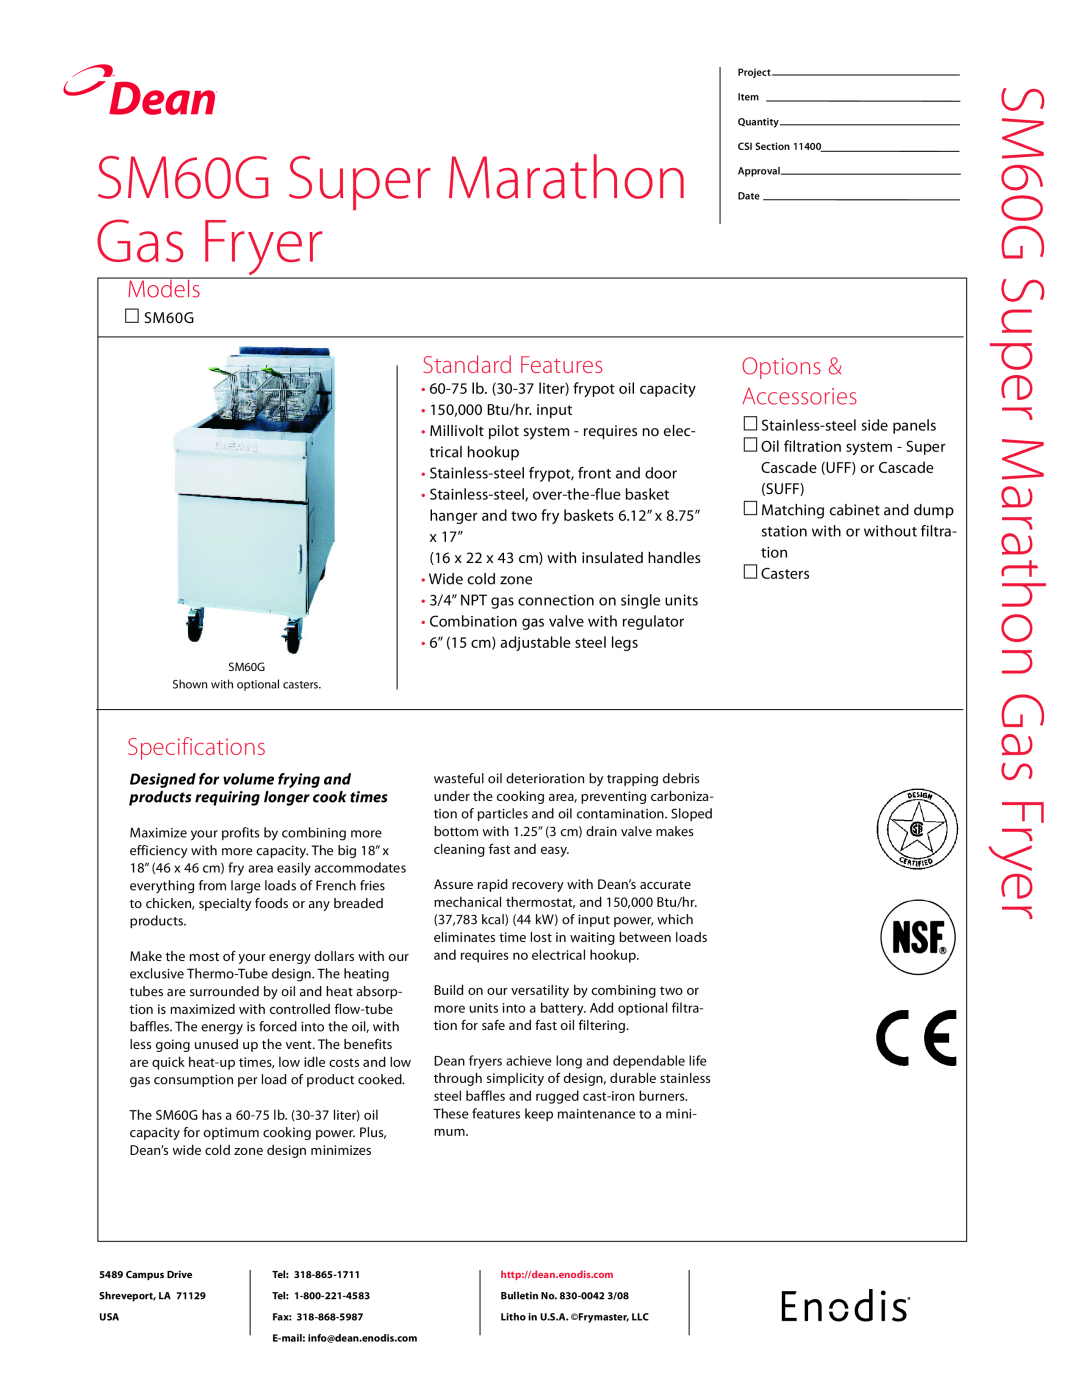 Teac specifications Dean, SM60G Super Marathon Gas Fryer, Models, Standard Features, Options Accessories 